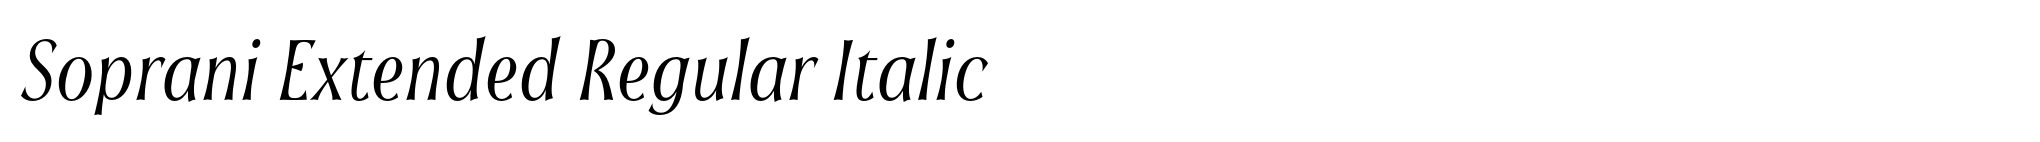 Soprani Extended Regular Italic image